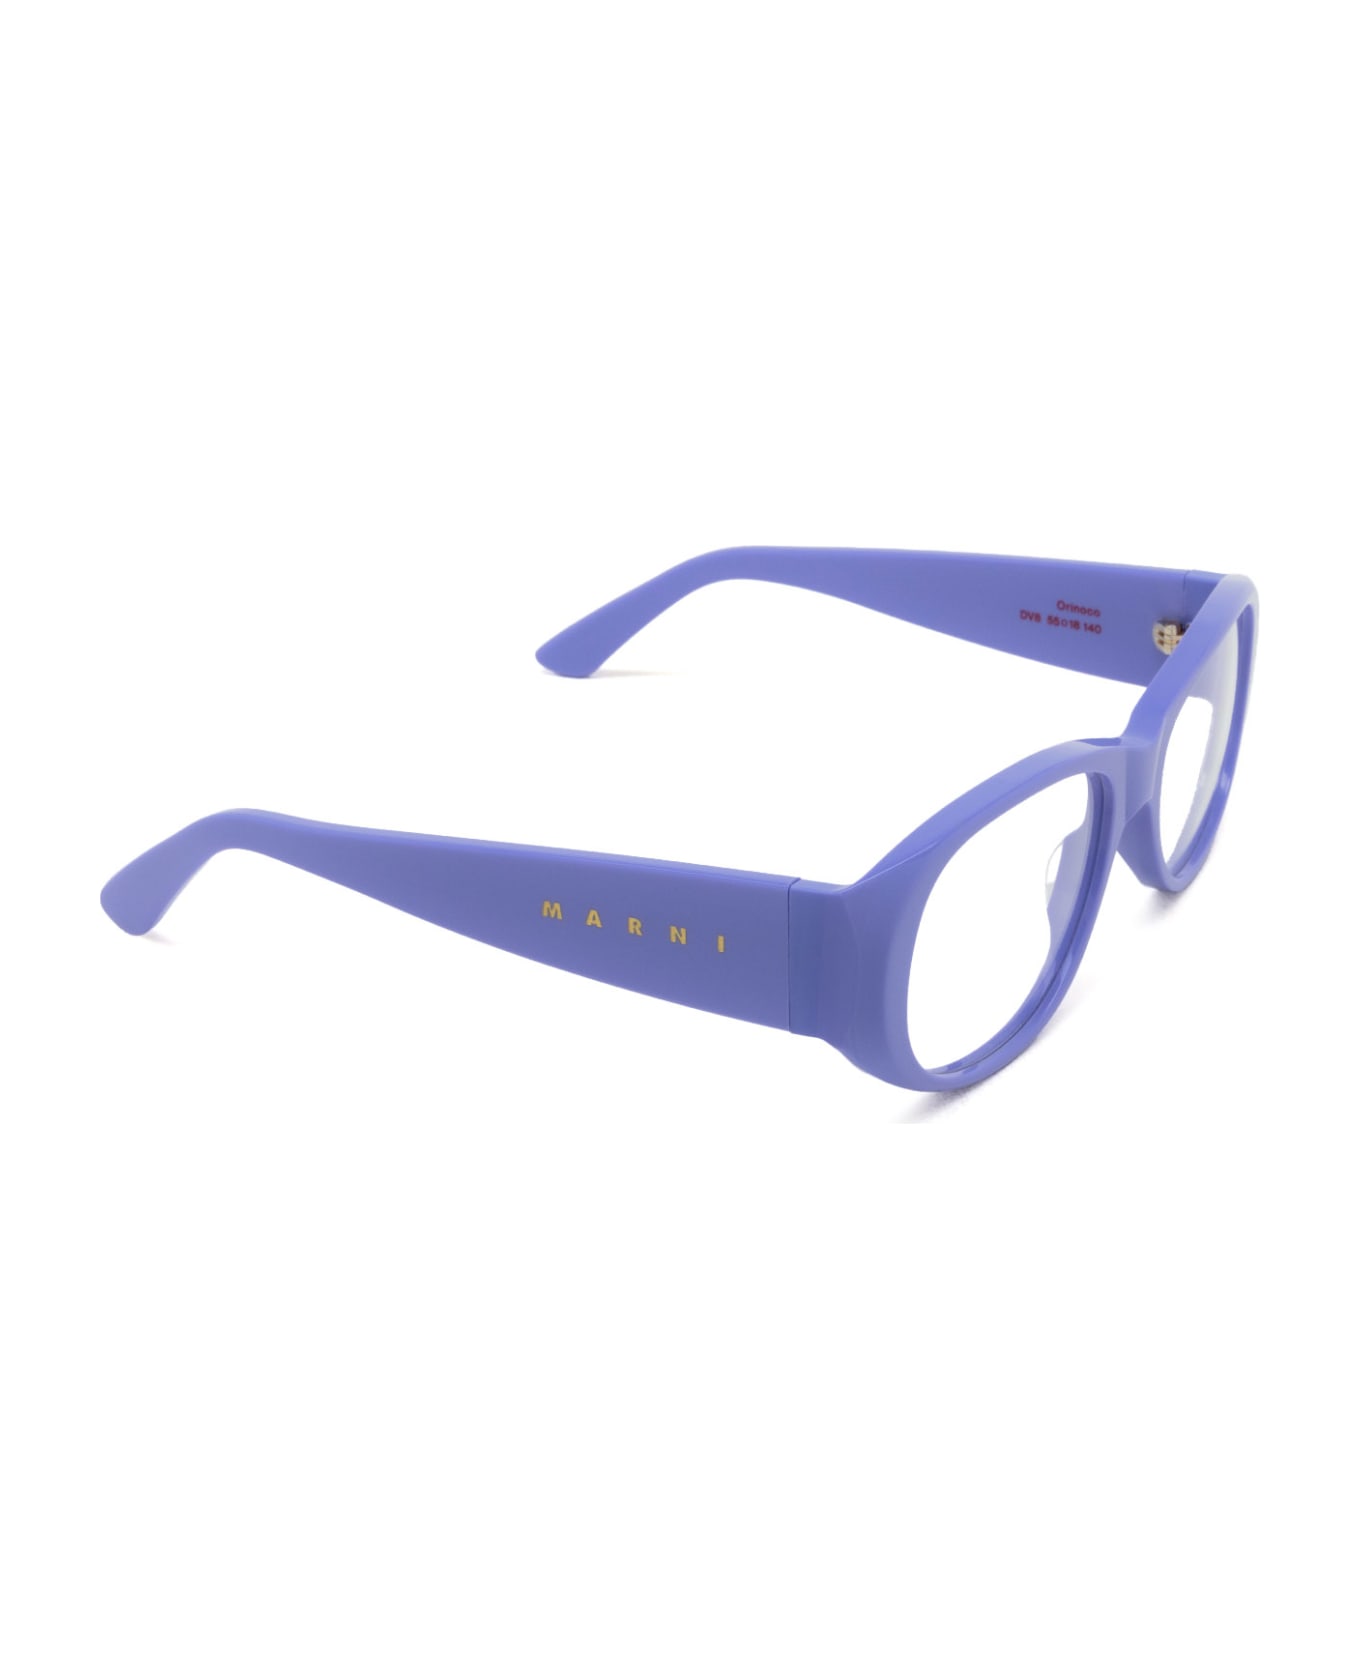 Marni Eyewear Orinoco Optical Lilac Glasses - Lilac